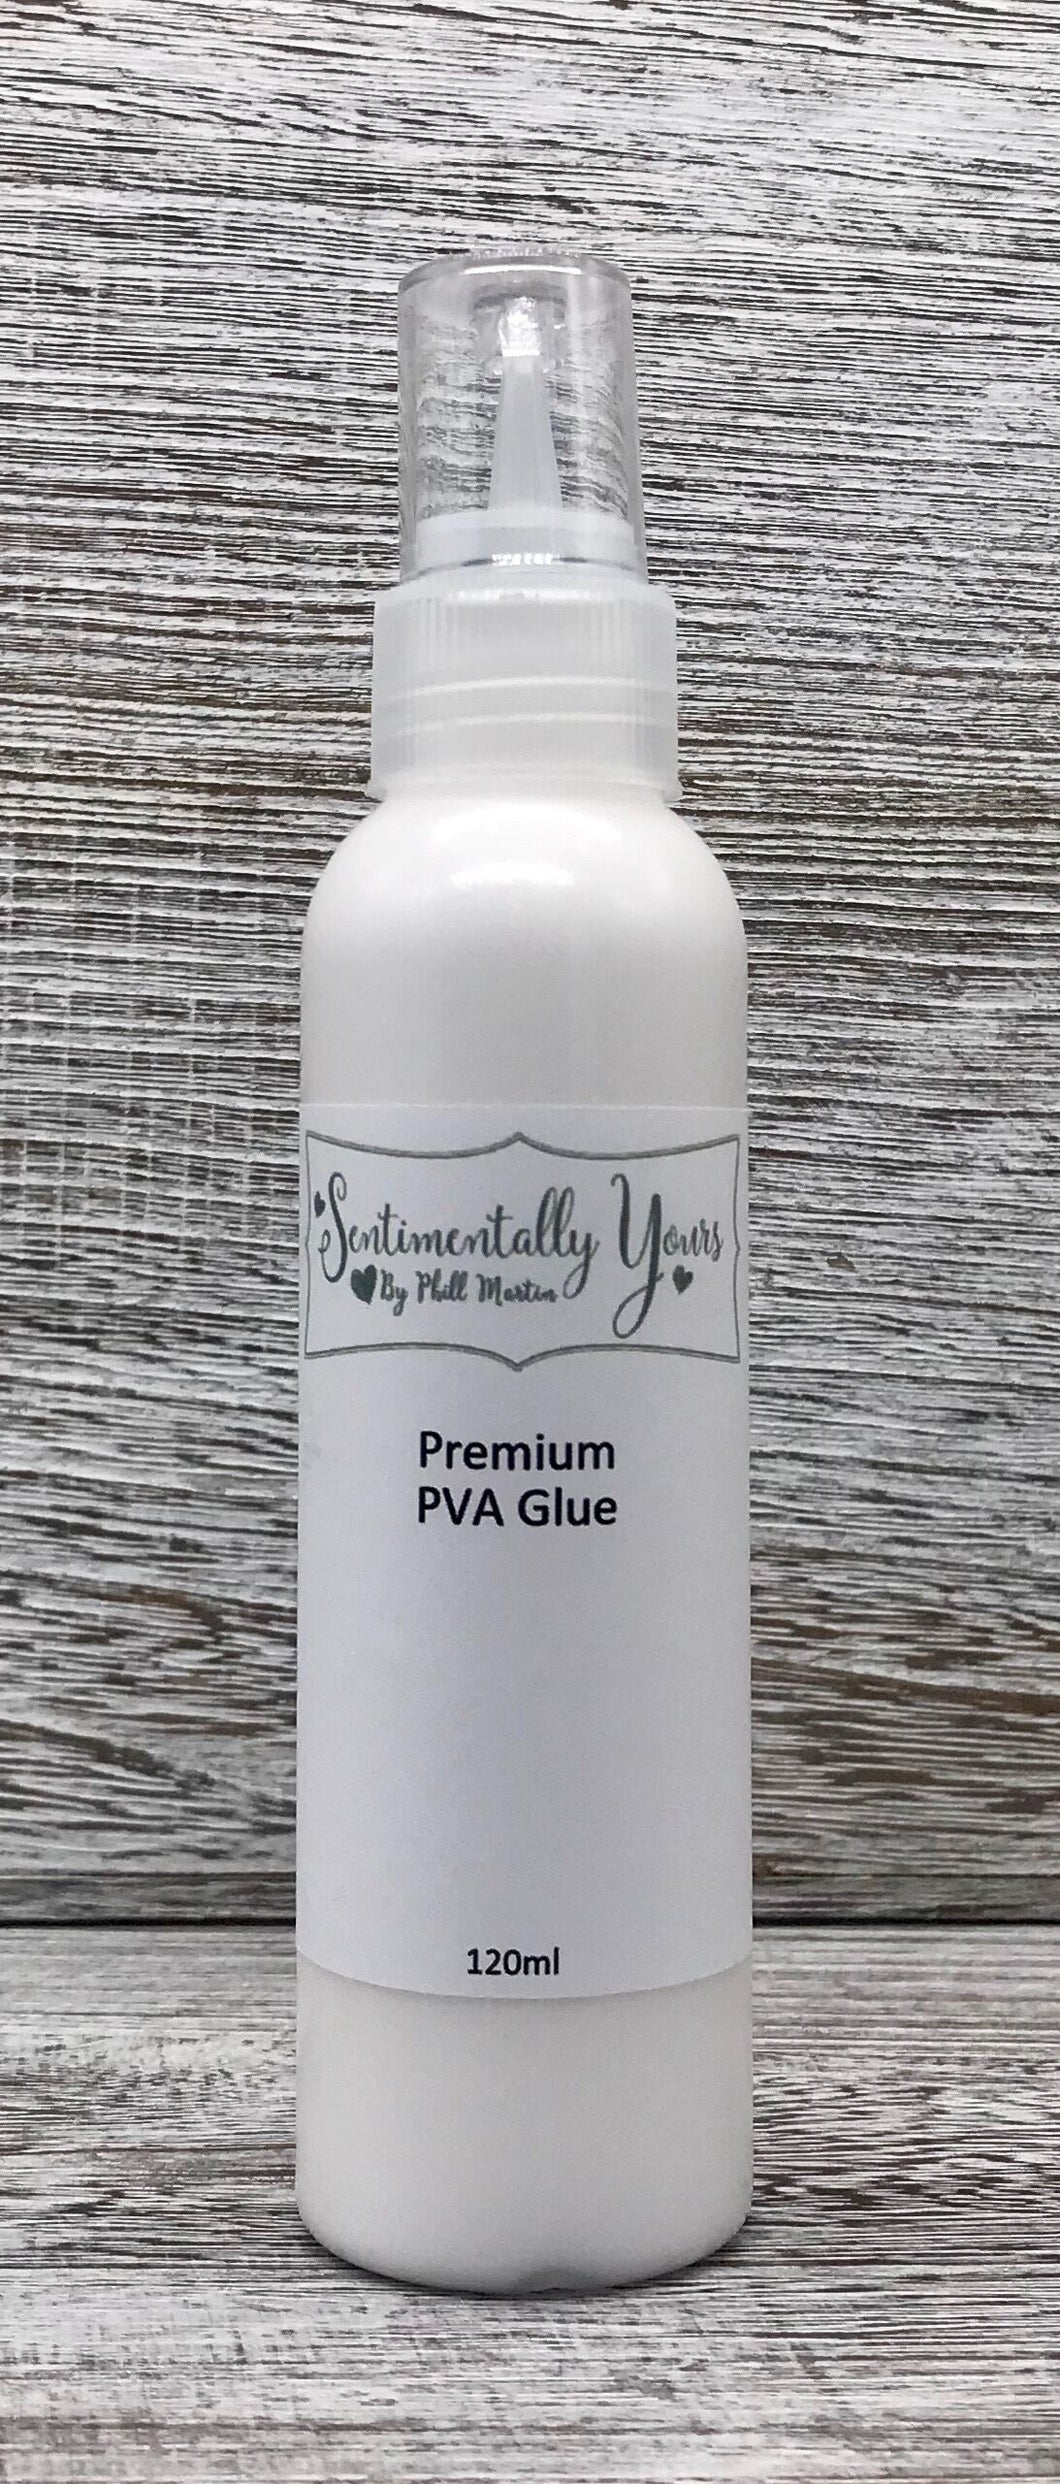 Sentimentally Yours Premium PVA Glue - 120ml